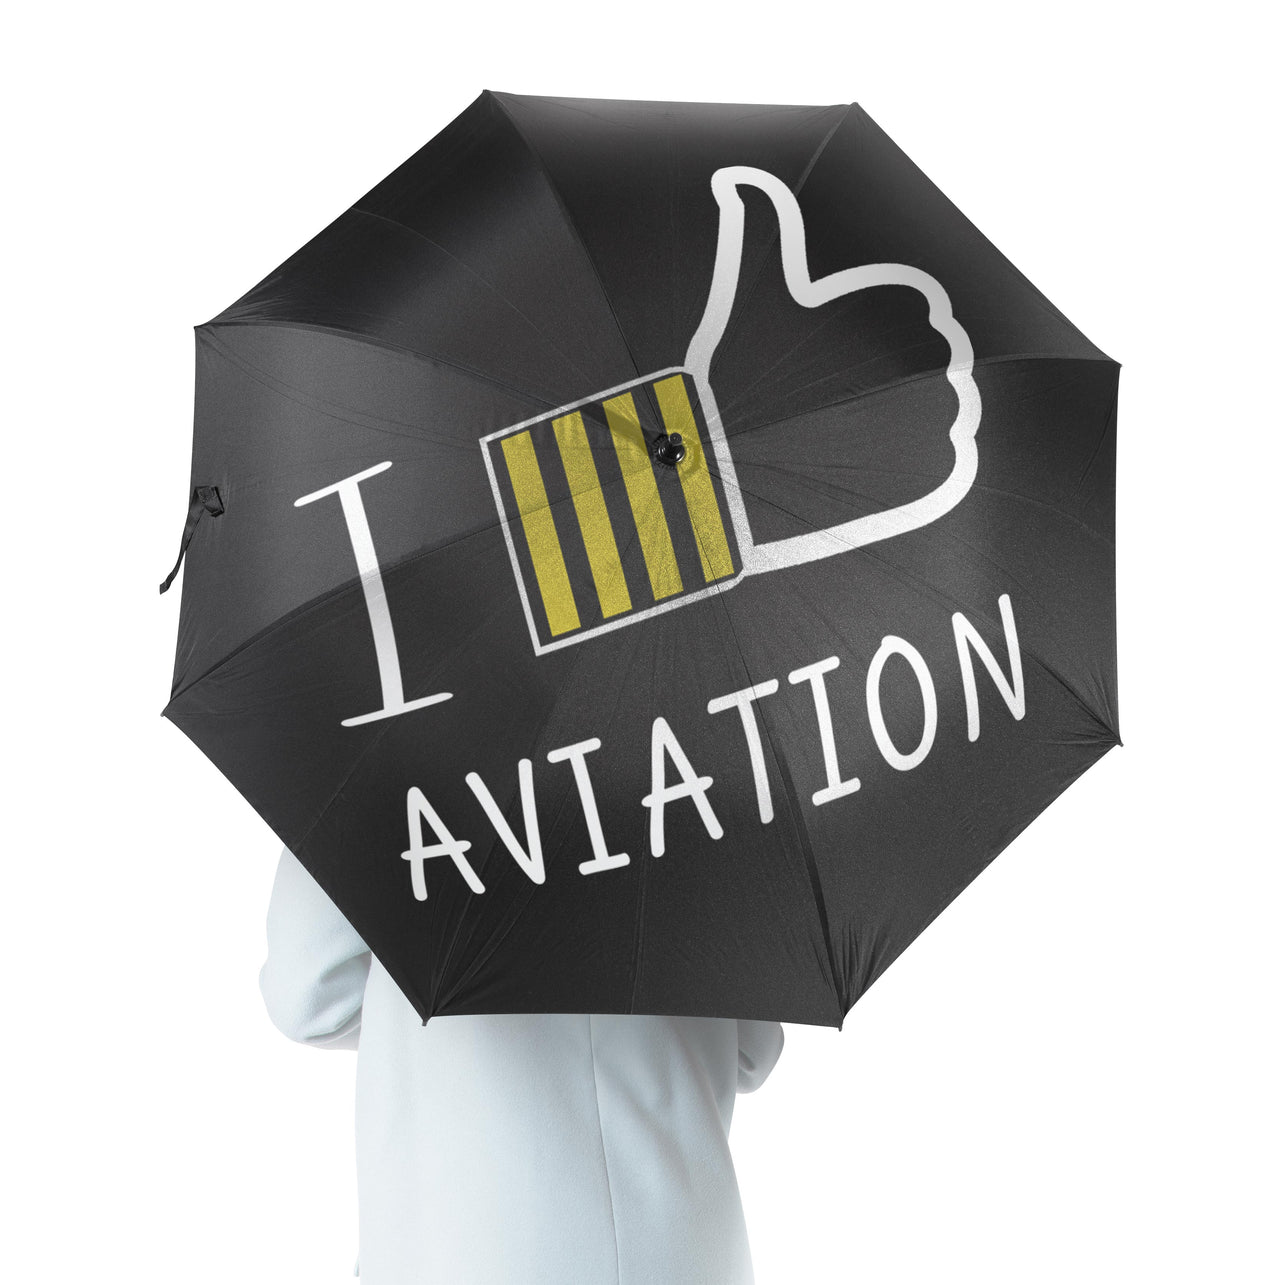 I Like Aviation Designed Umbrella